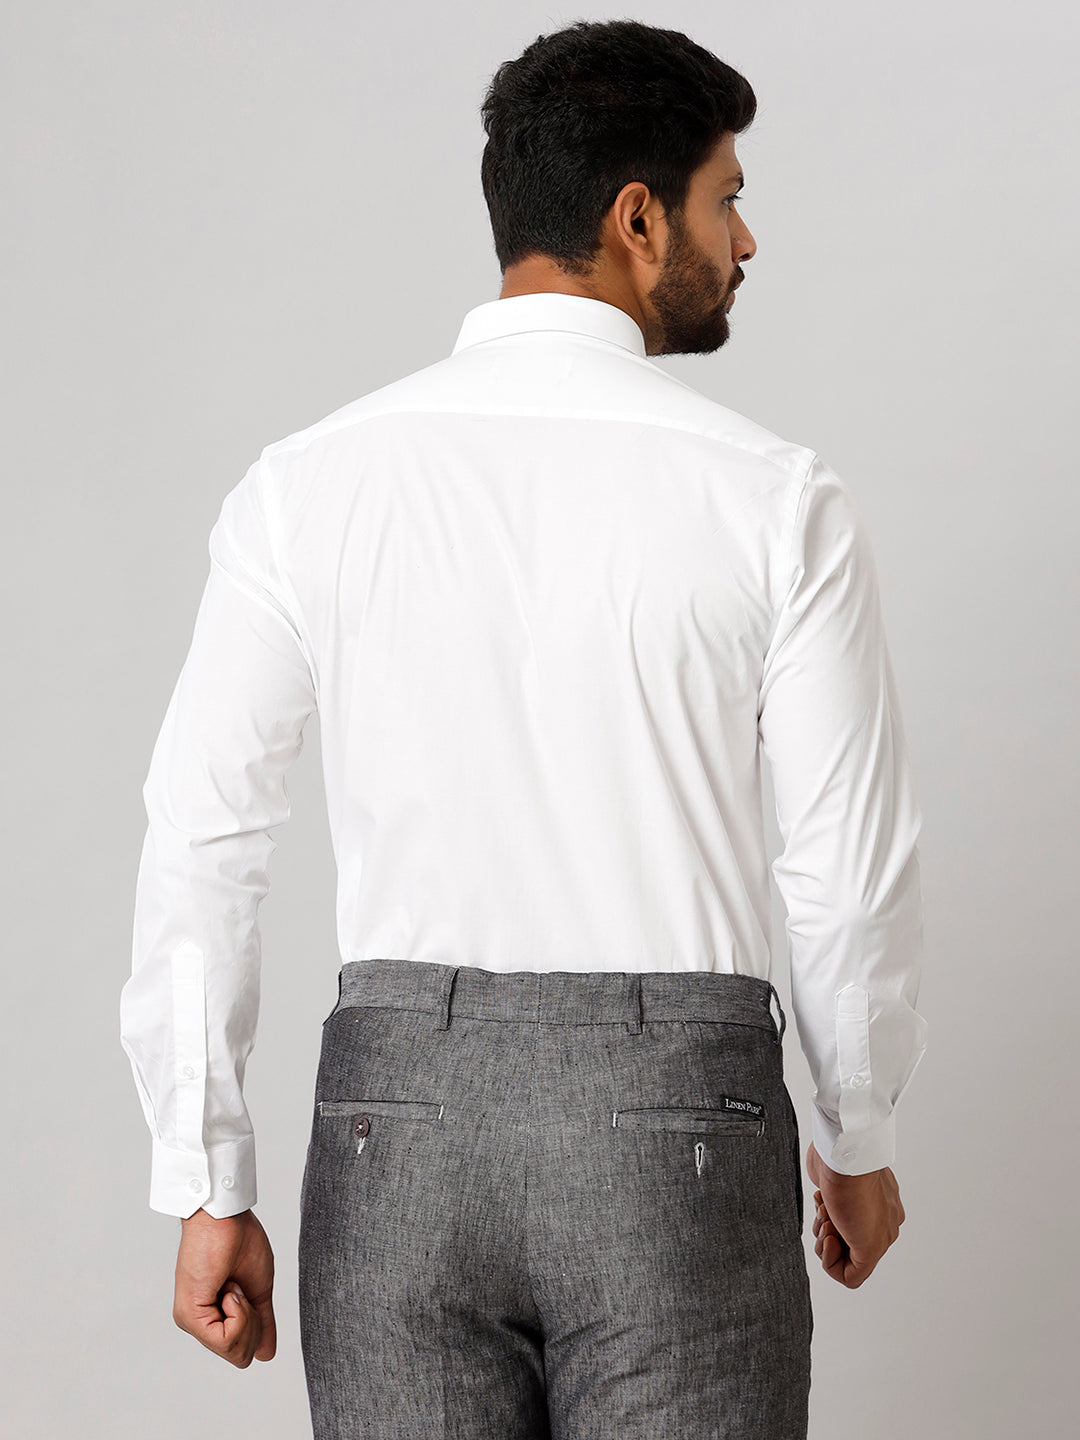 Mens Uniform Linen Cotton White Shirt Full Sleeves-Back view